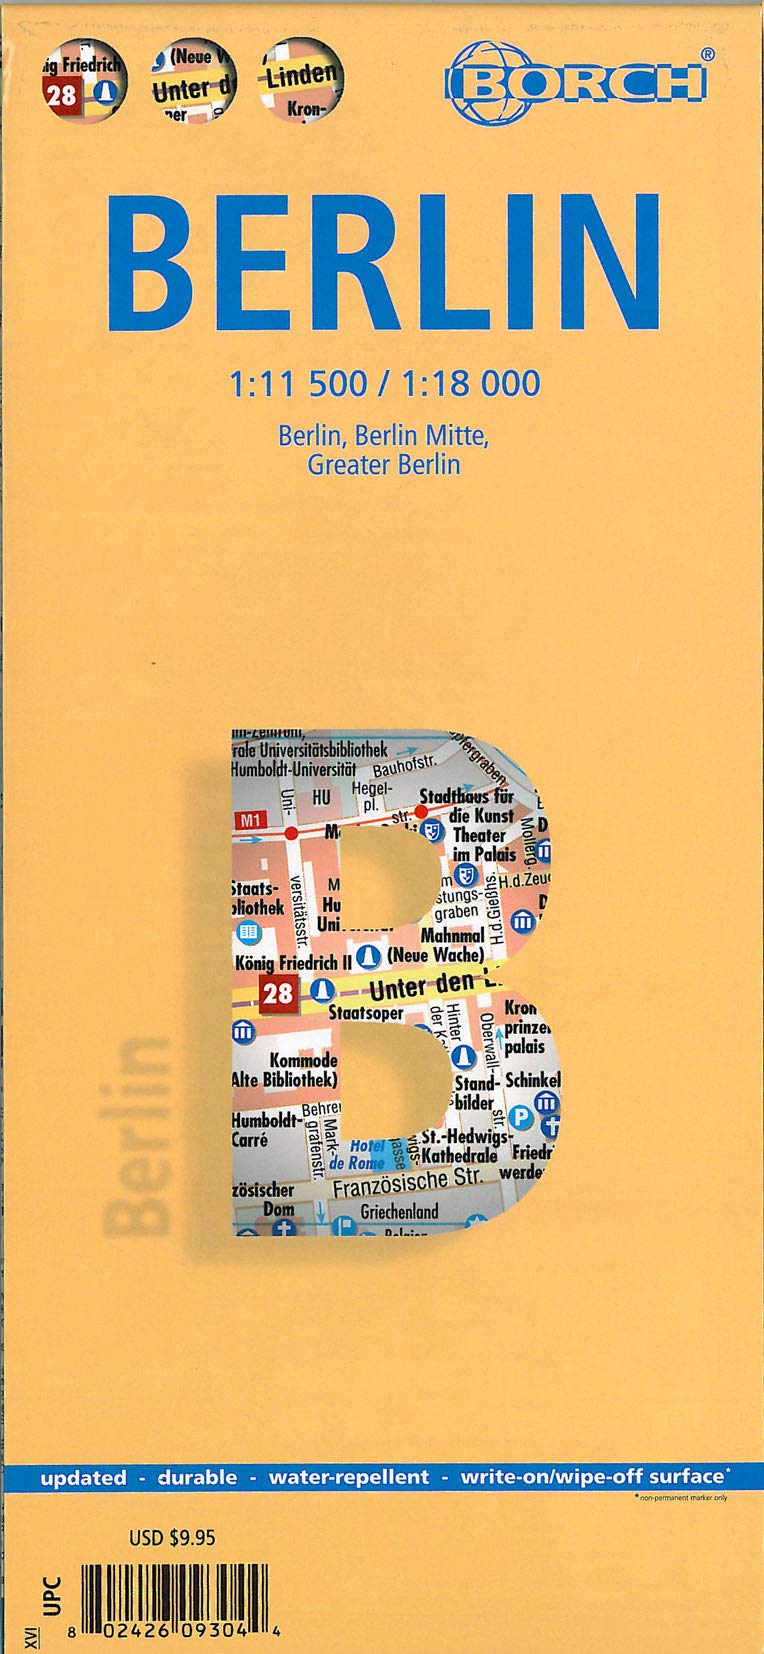 Berlin Borch City Map 1:11500/1:18000- 2019